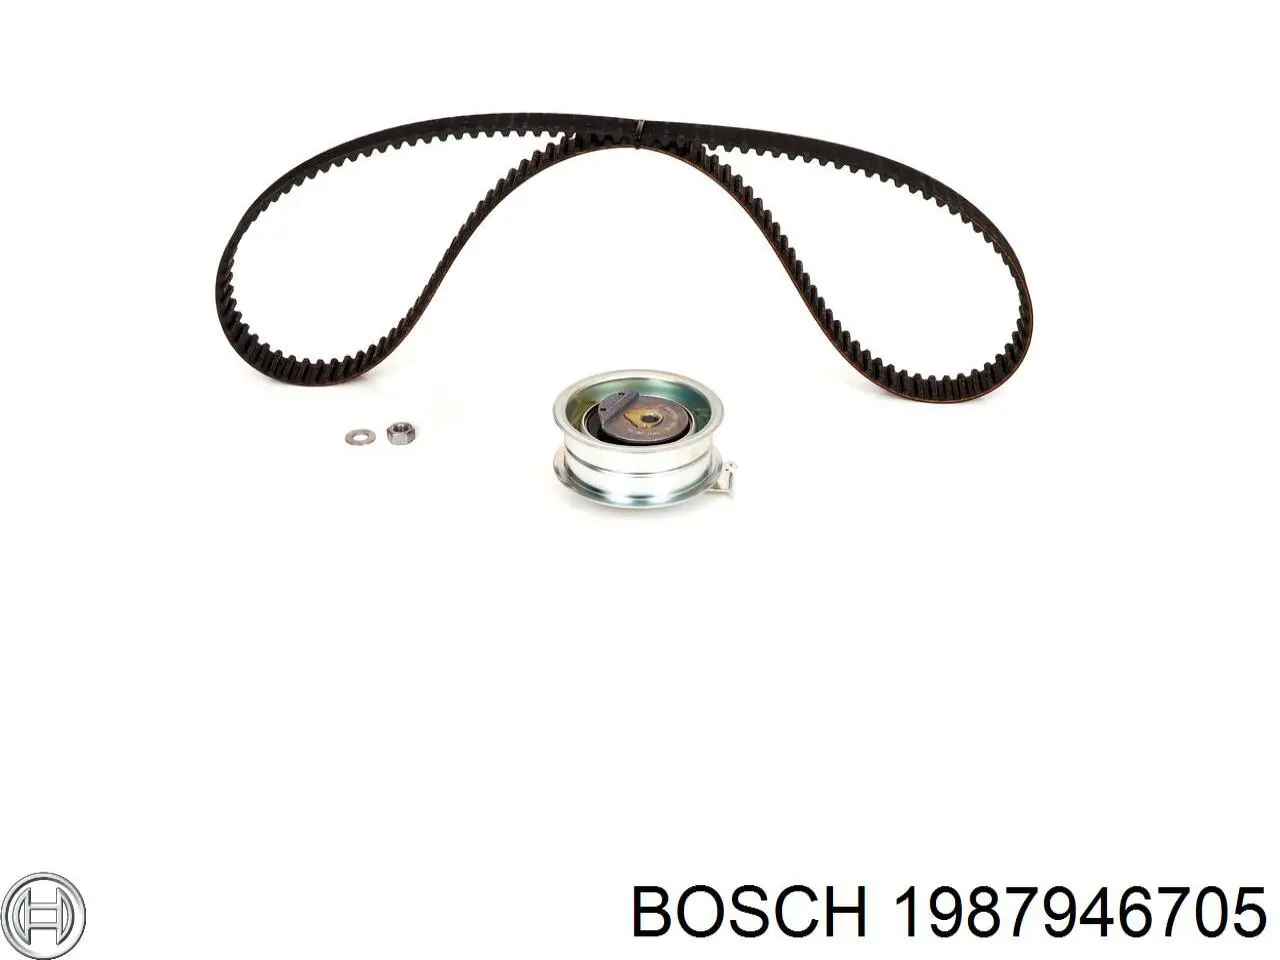 1987946705 Bosch kit de correa de distribución